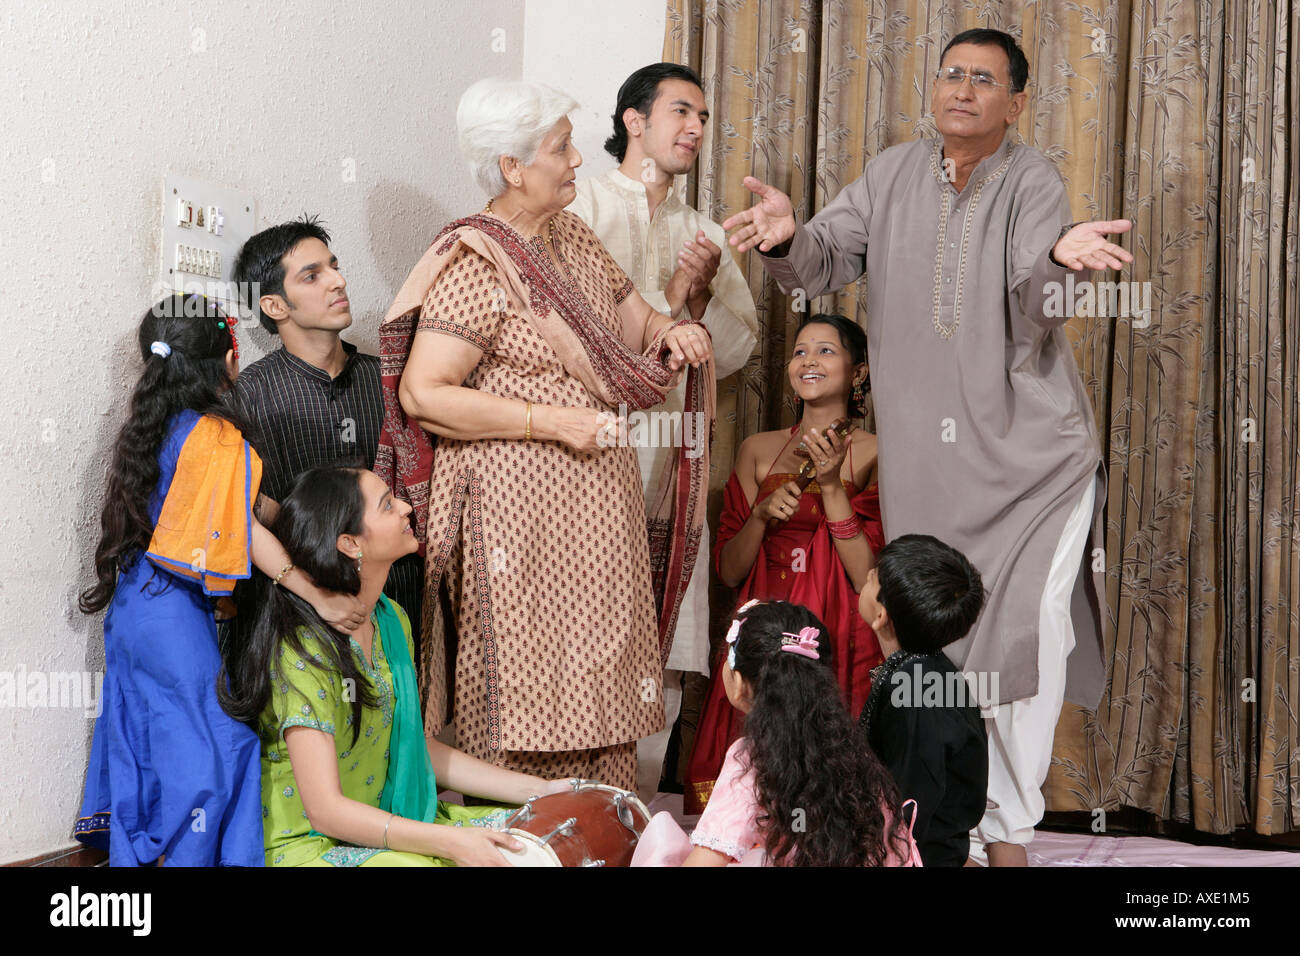 Senior man dancing with his family looking at him Stock Photo